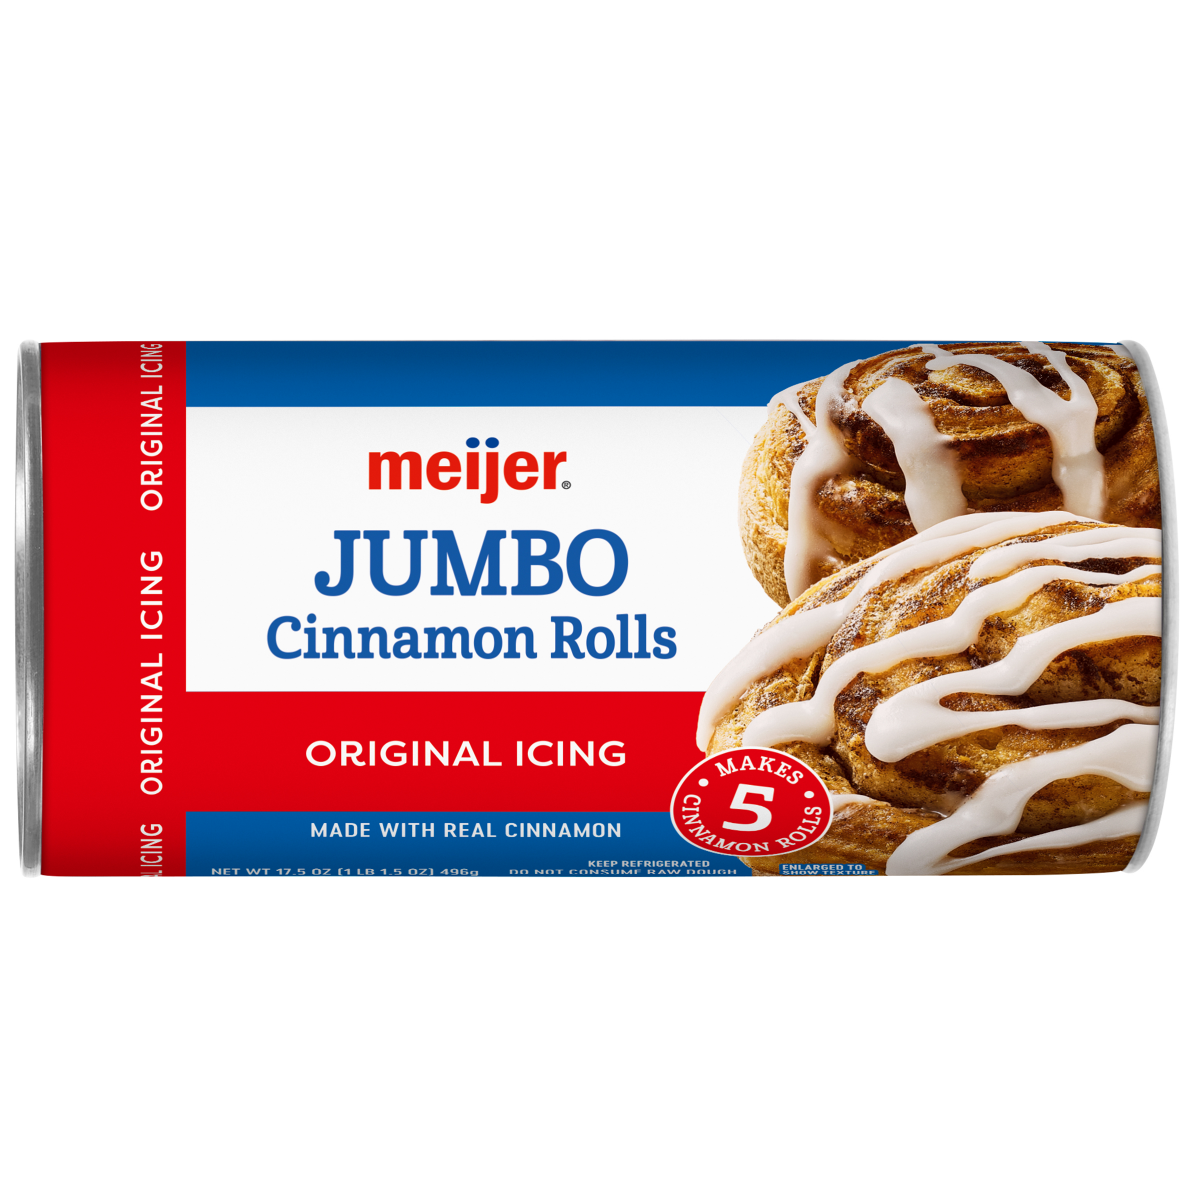 slide 1 of 17, Meijer Jumbo Cinnamon Rolls with Original Icing, 17.5 oz